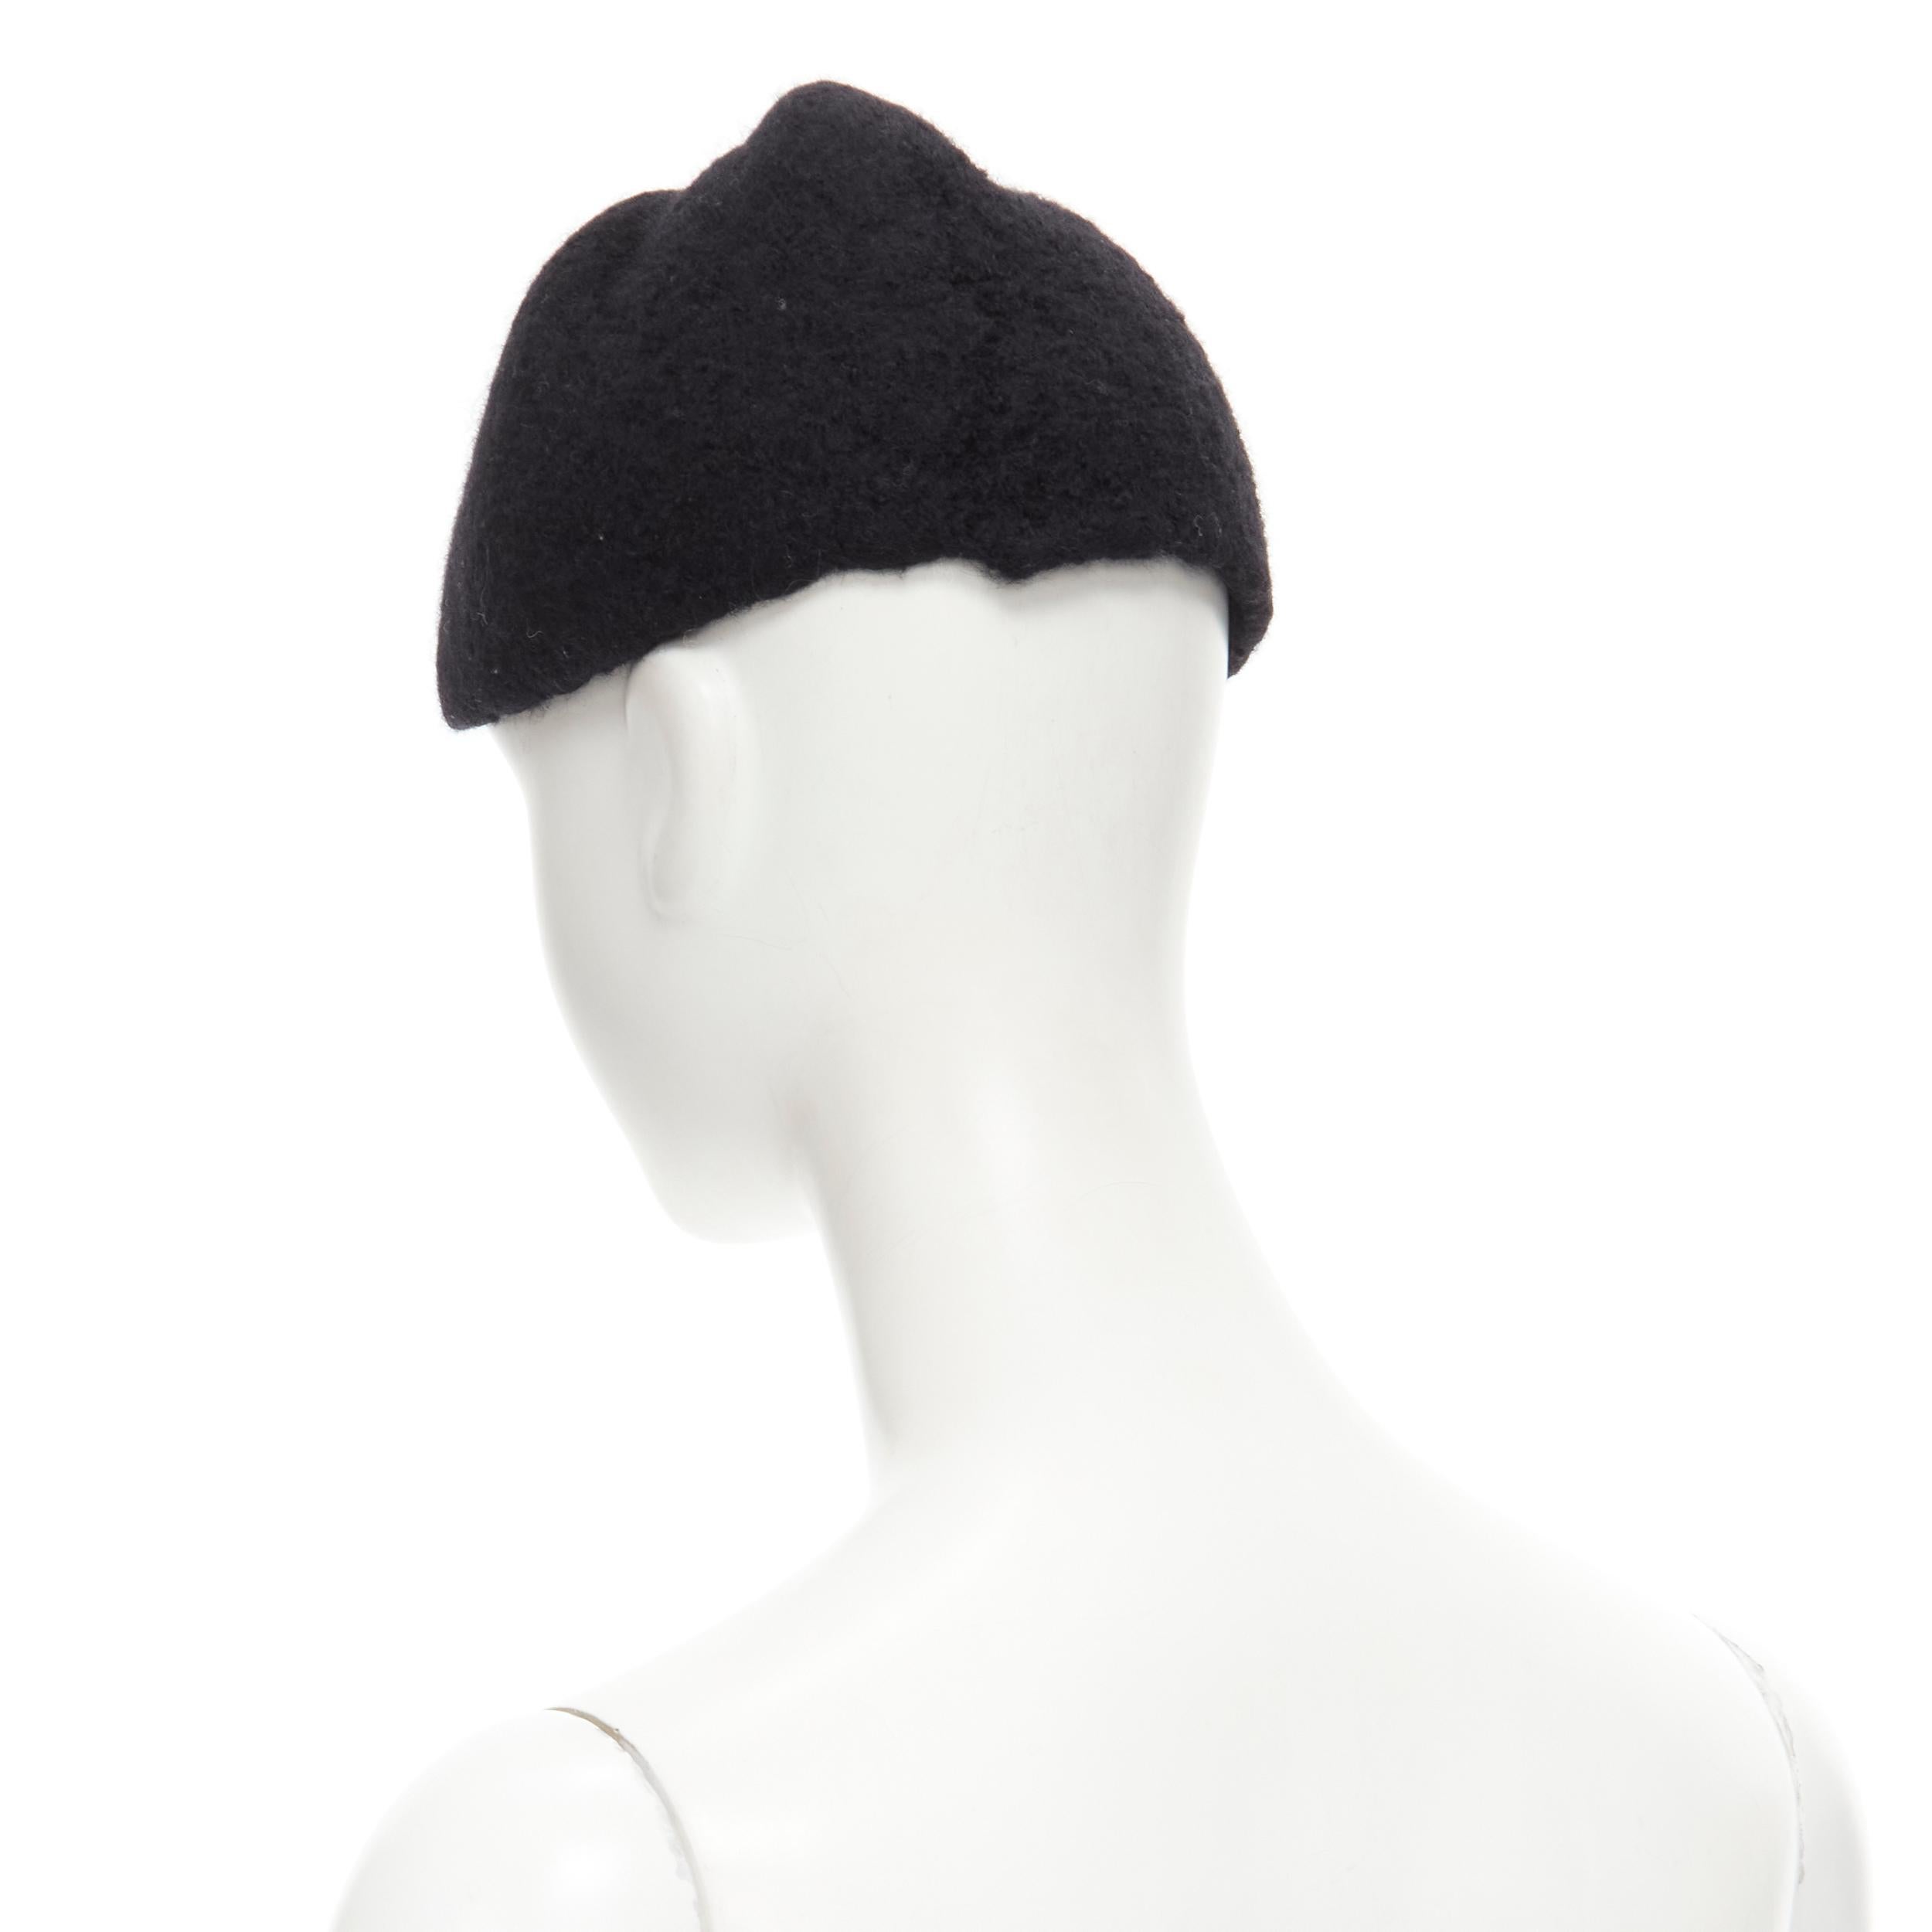 Black YOHJI YAMAMOTO 1990's Vintage black heavy boiled wool pinched top beanie cap